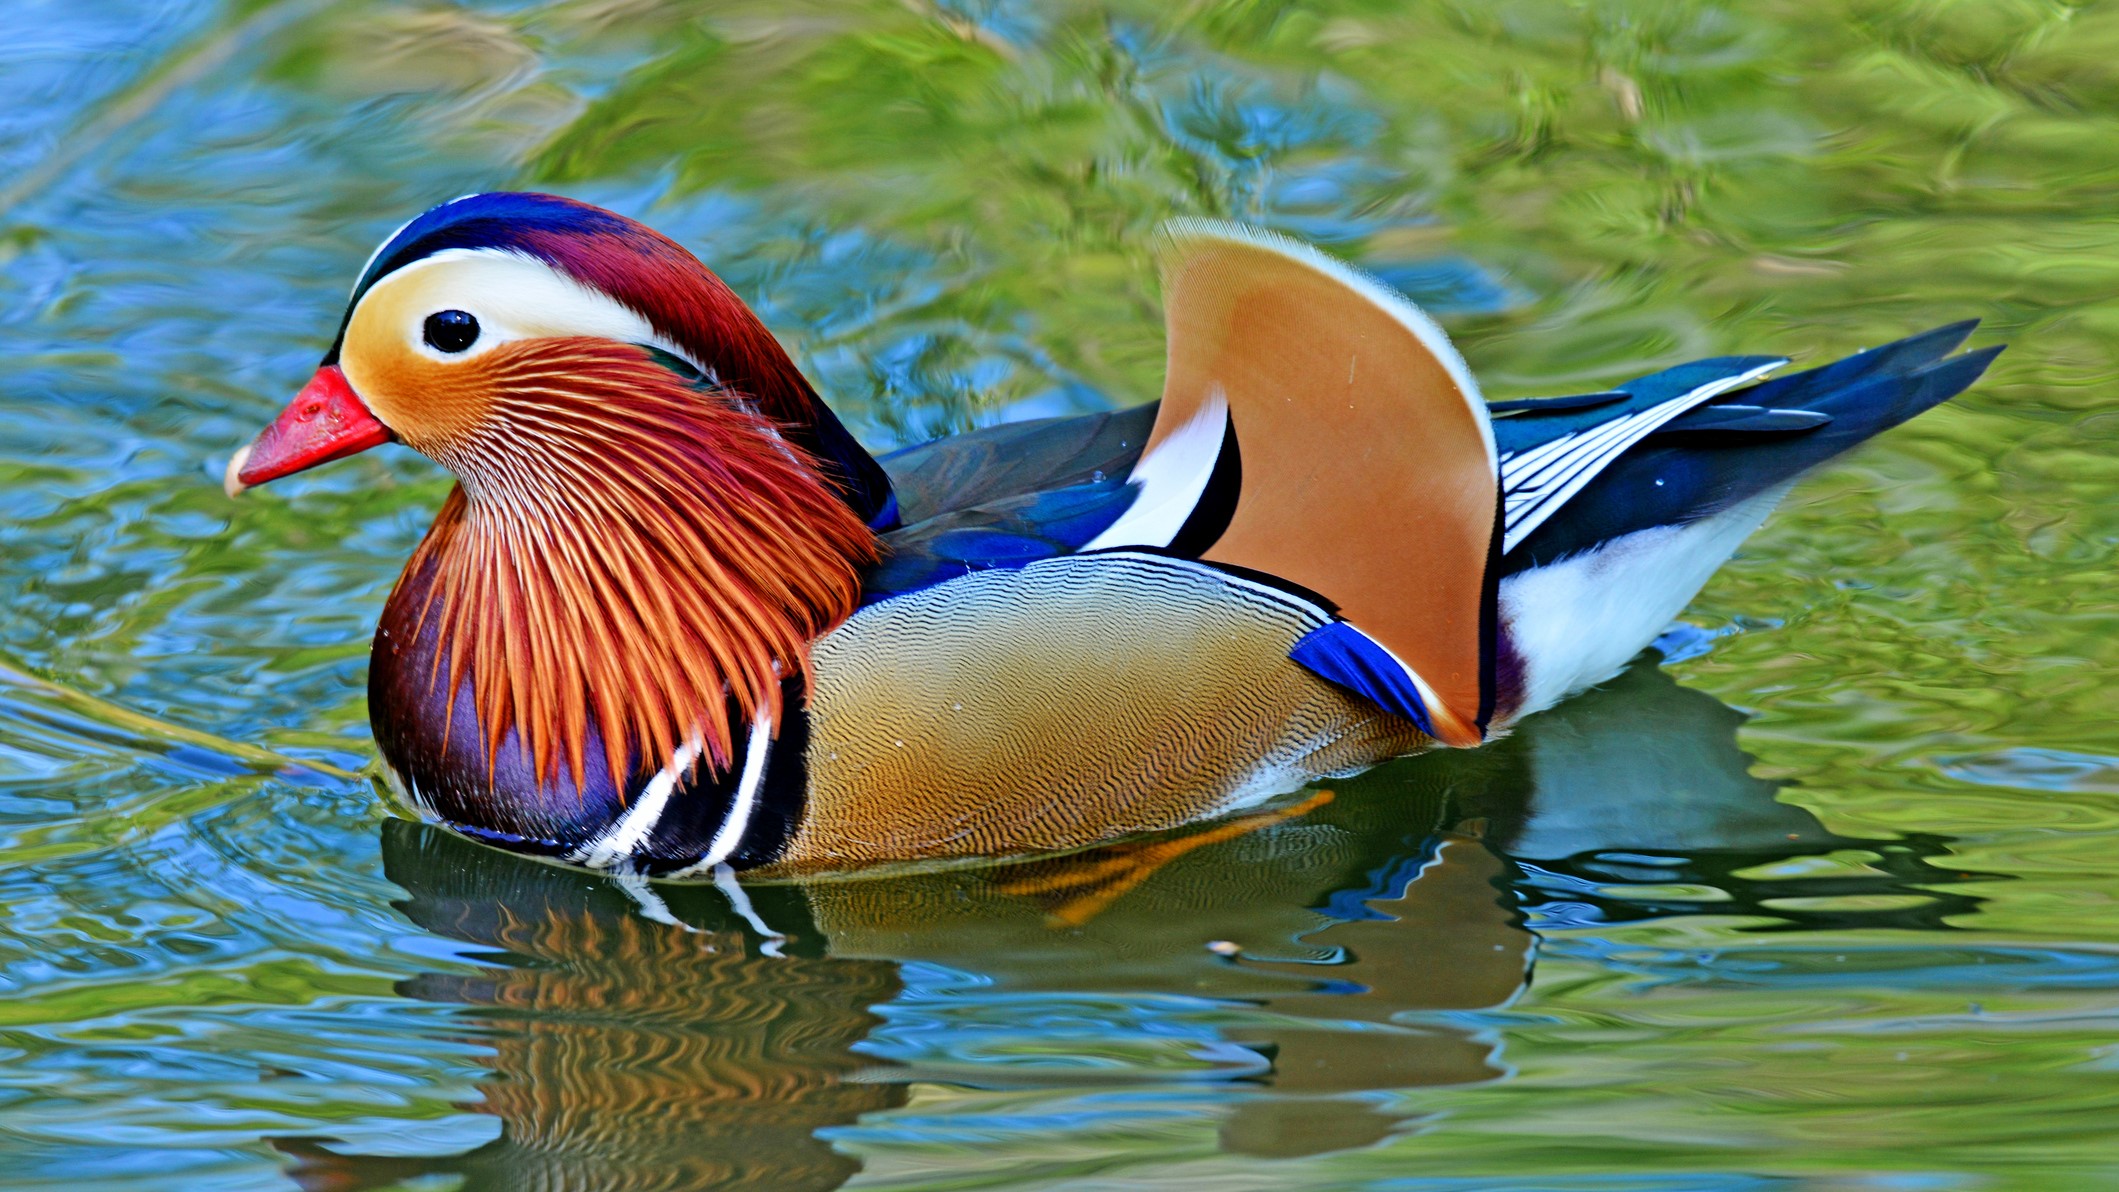 A male mandarin duck in the water.